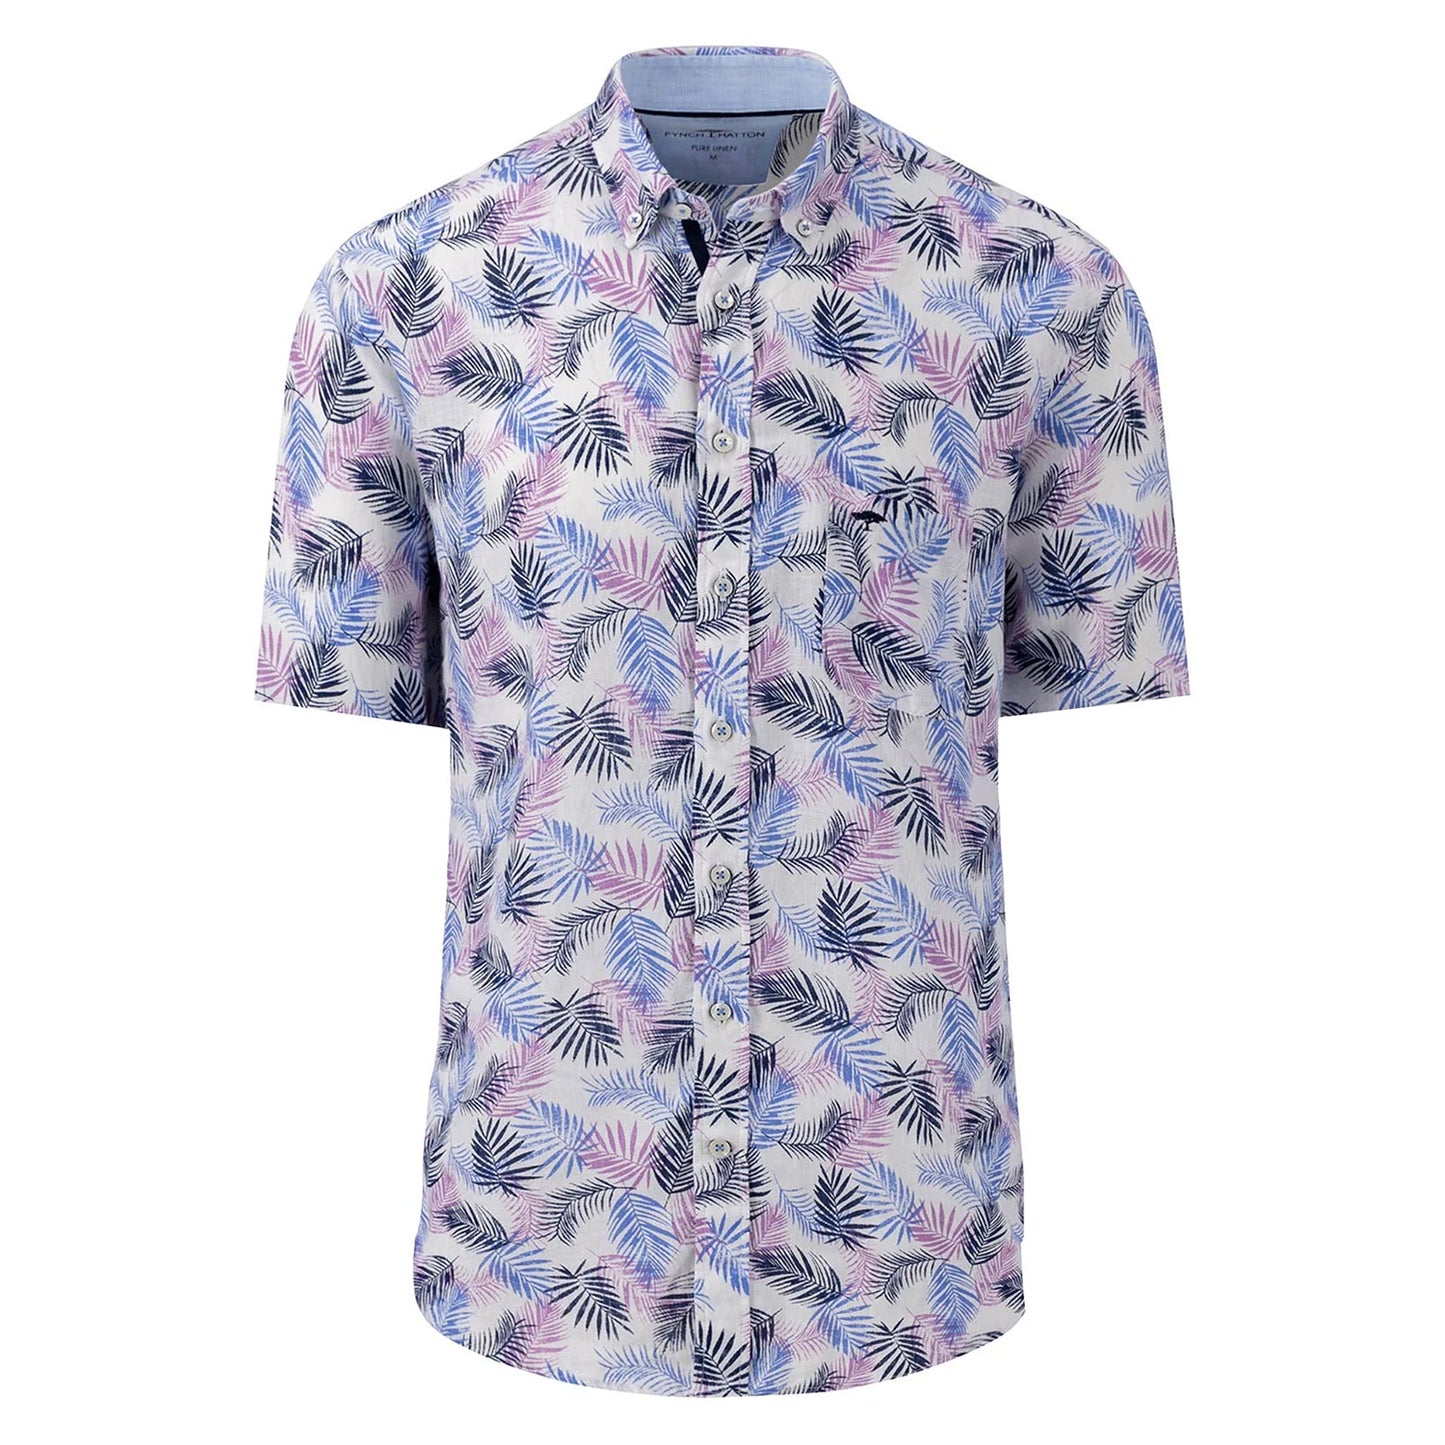 Fynch-Hatton Men's Short Sleeve Shirt Leaf Print - Lavender